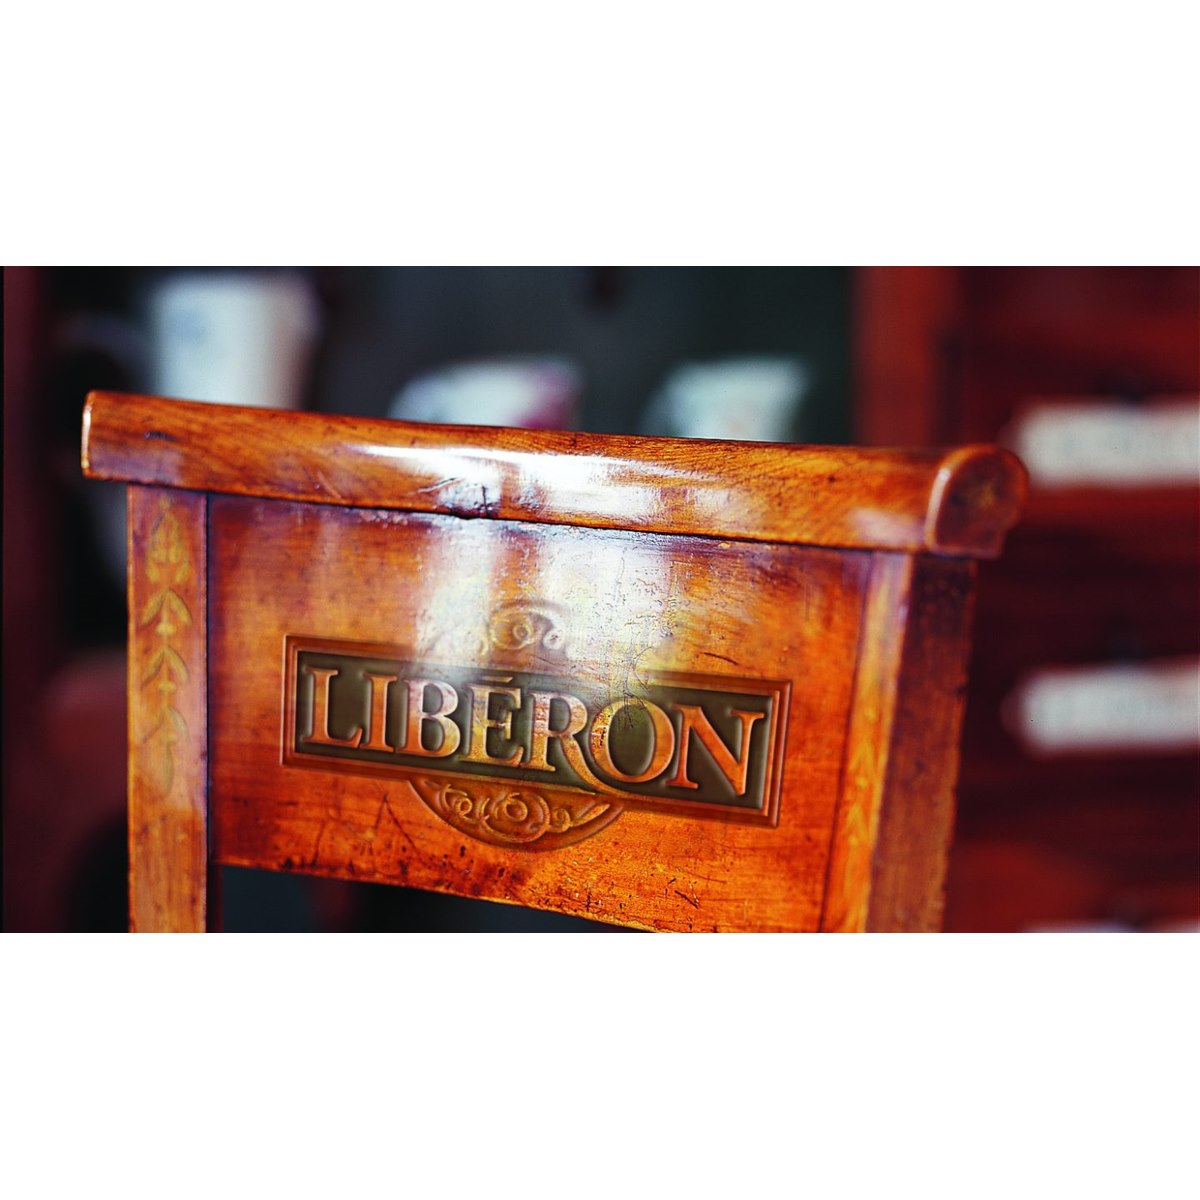 Where to buy Liberon Hard Wax